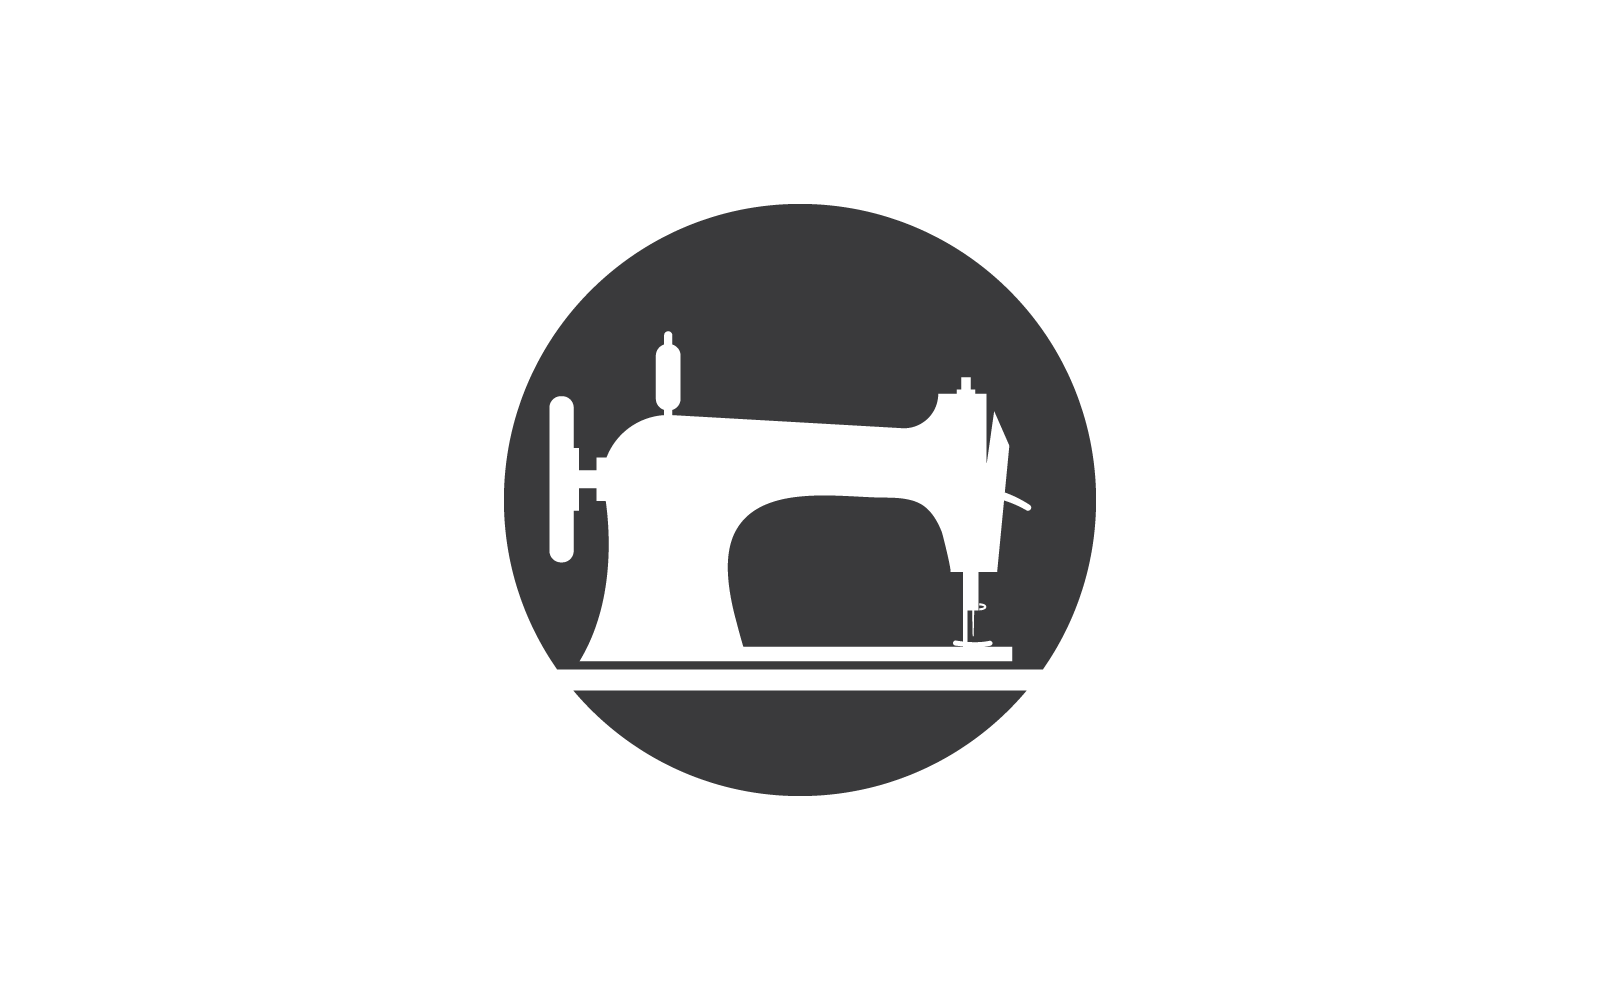 Tailor or textile logo vector icon illustration design